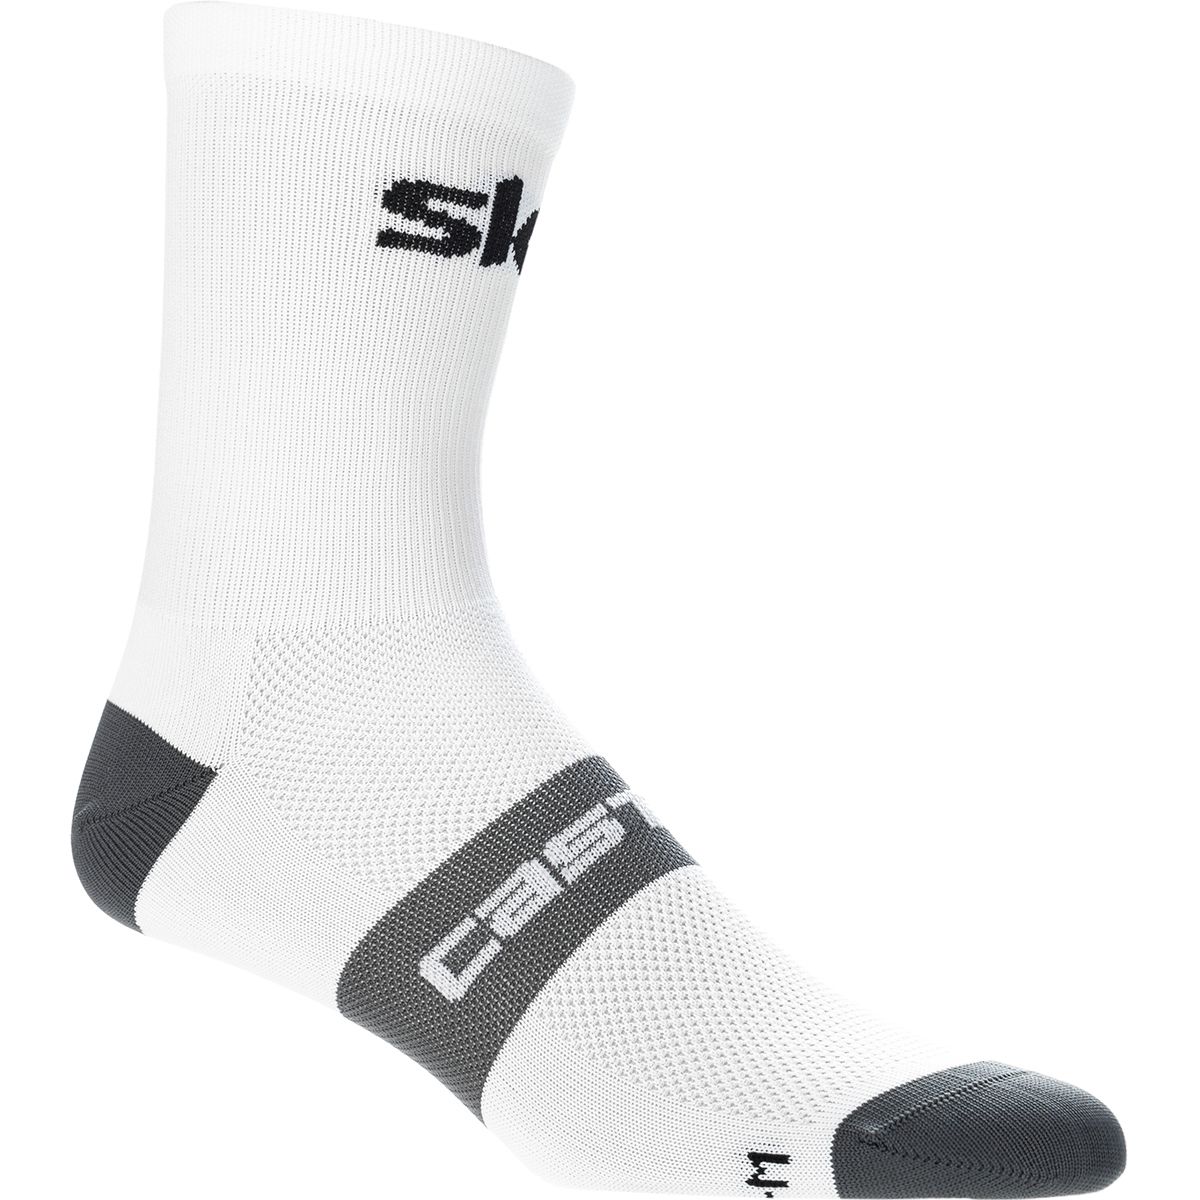 Castelli TEAM SKY Free 12 Sock - Men's